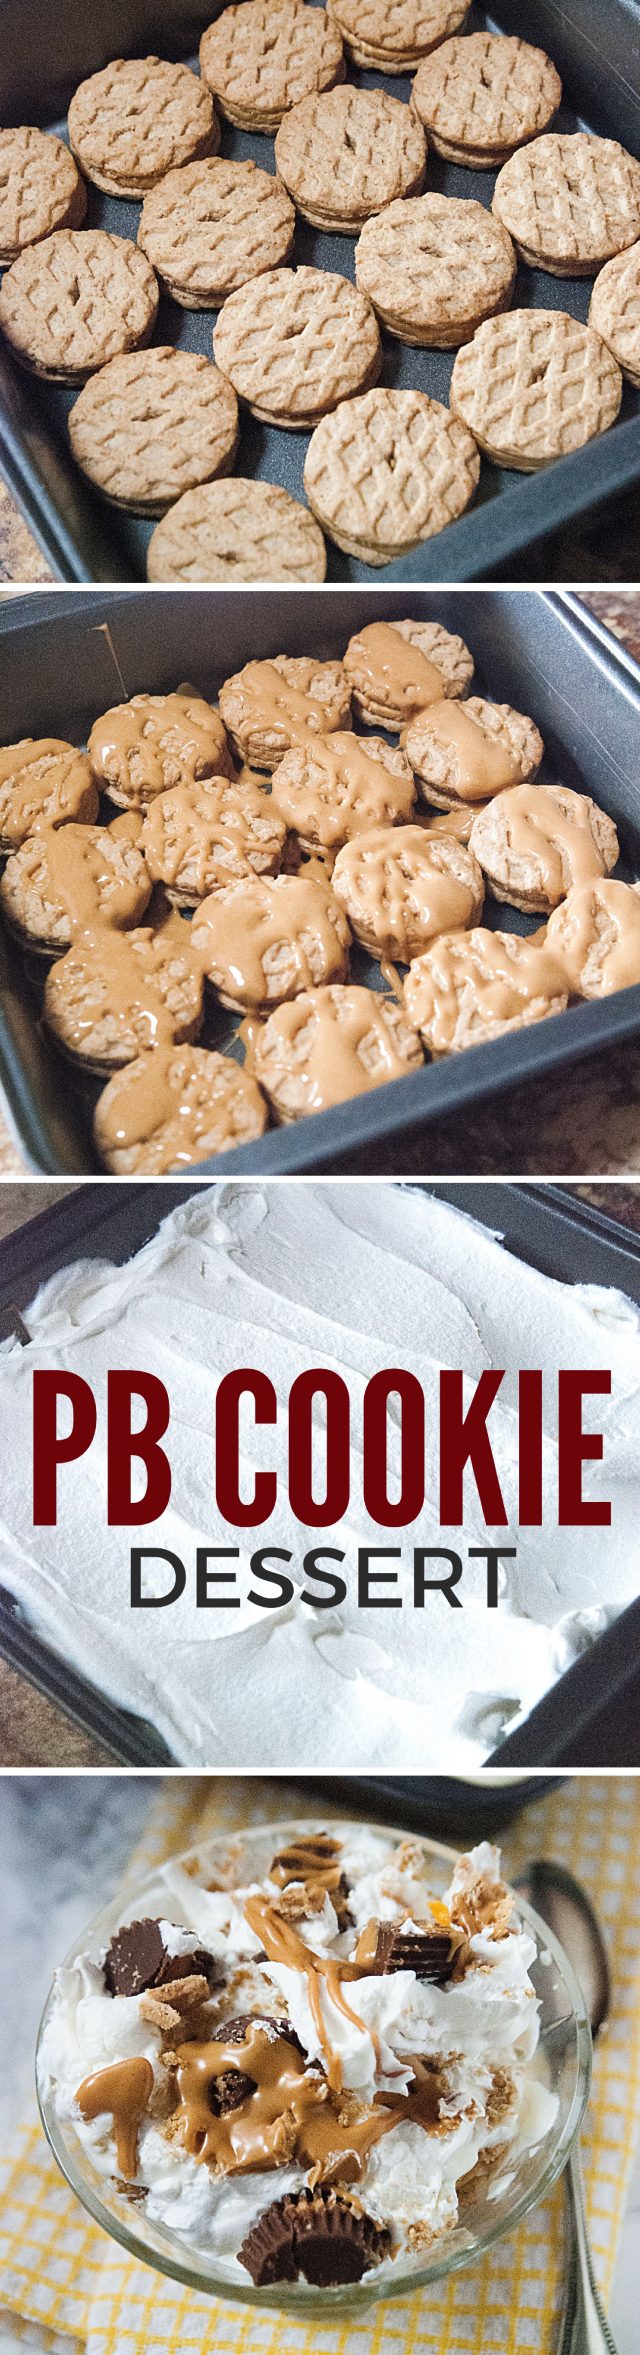 Easy Peanut Butter Cookie Dessert Recipe